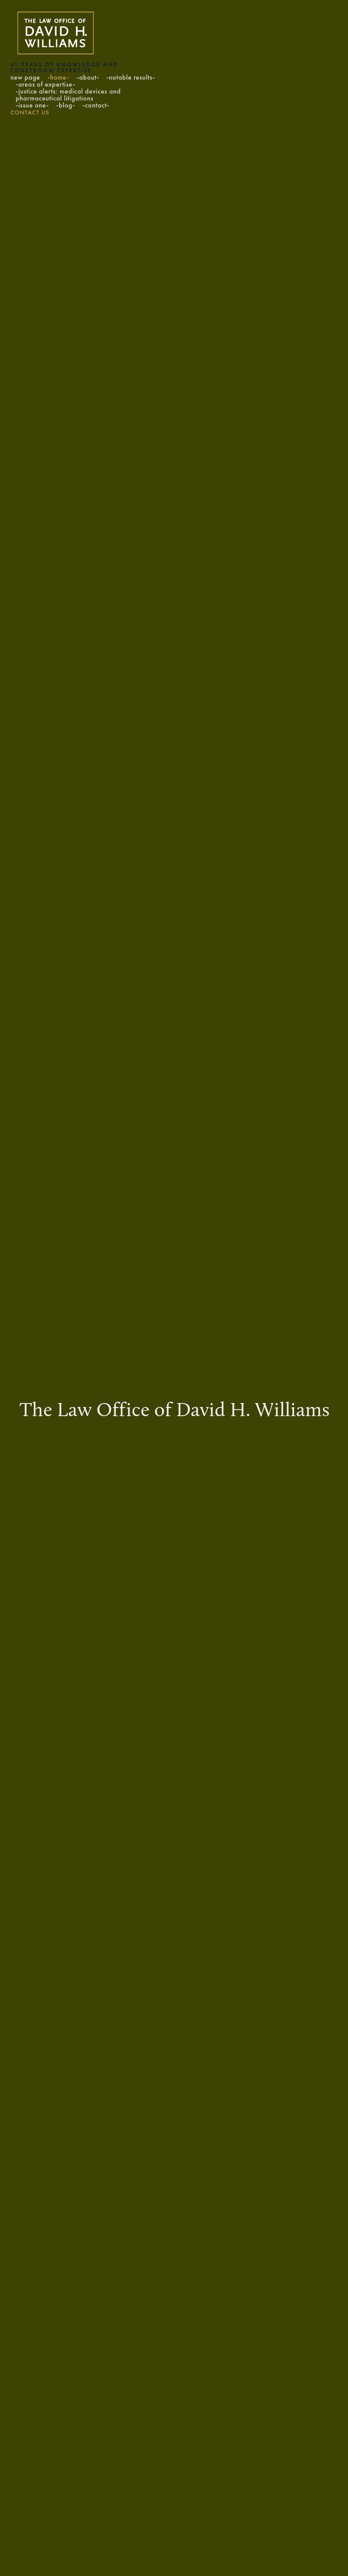 David H. Williams - Little Rock AR Lawyers